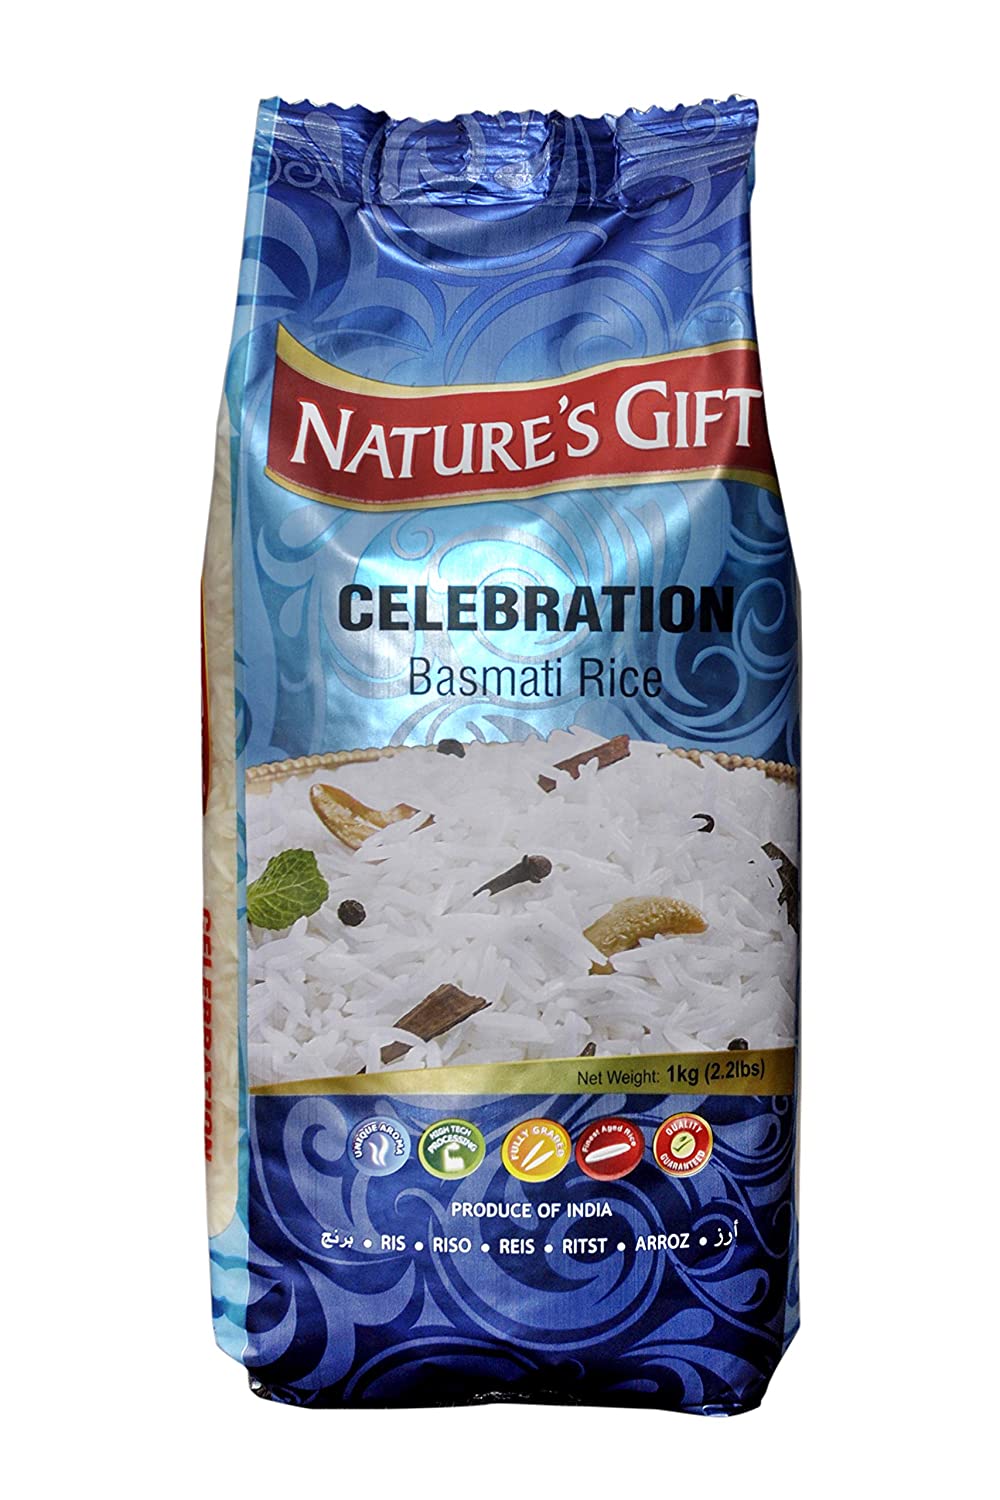 Nature’s Gift Celebration Basmati Rice 1kg -- ข้าวบัสมาติ ตรา เนเจอร์กิฟ สูตรเซเลเบรชัน ขนาด 1kg